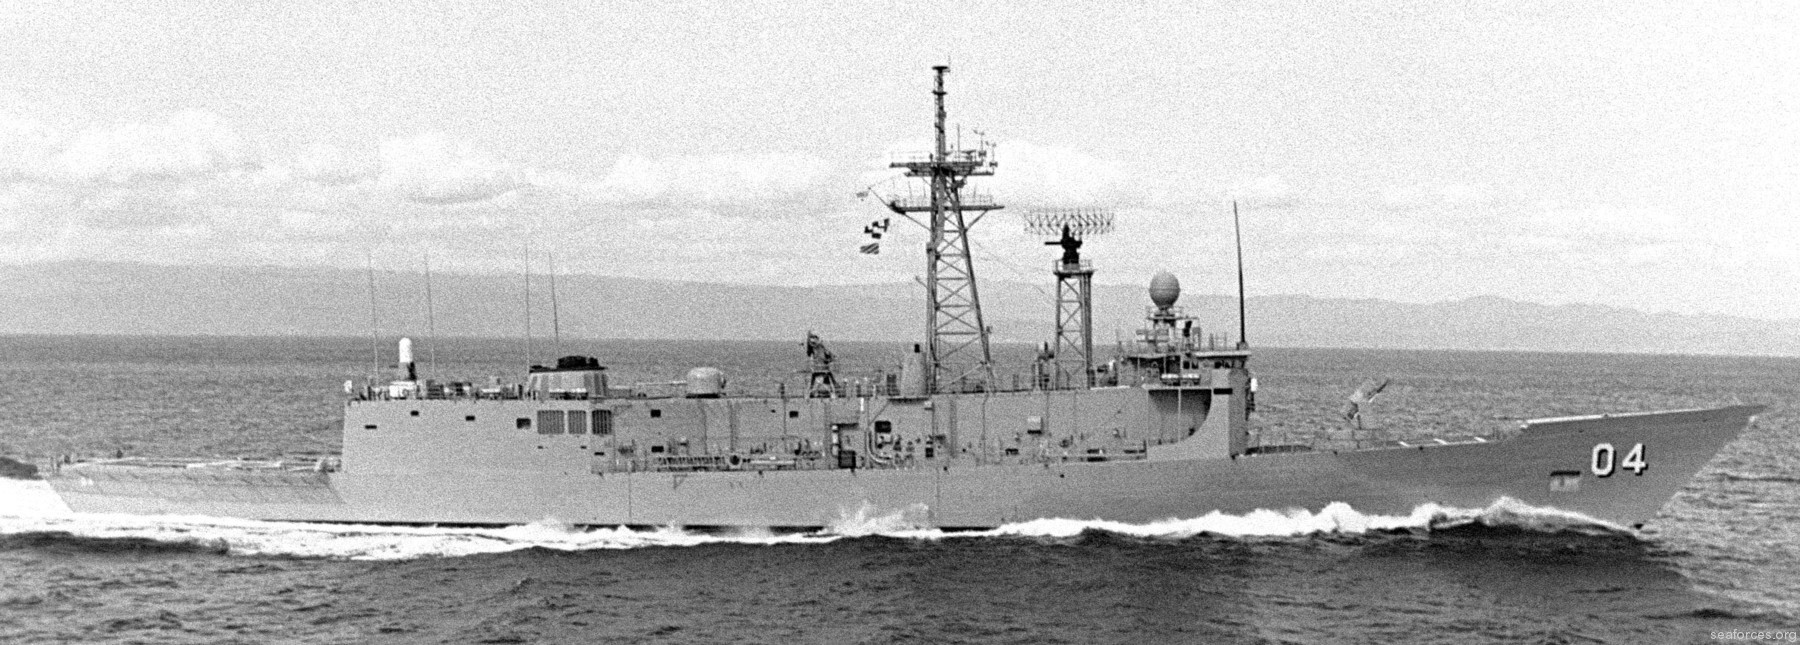 ffg-04 hmas darwin adelaide class frigate royal australian navy 1984 15